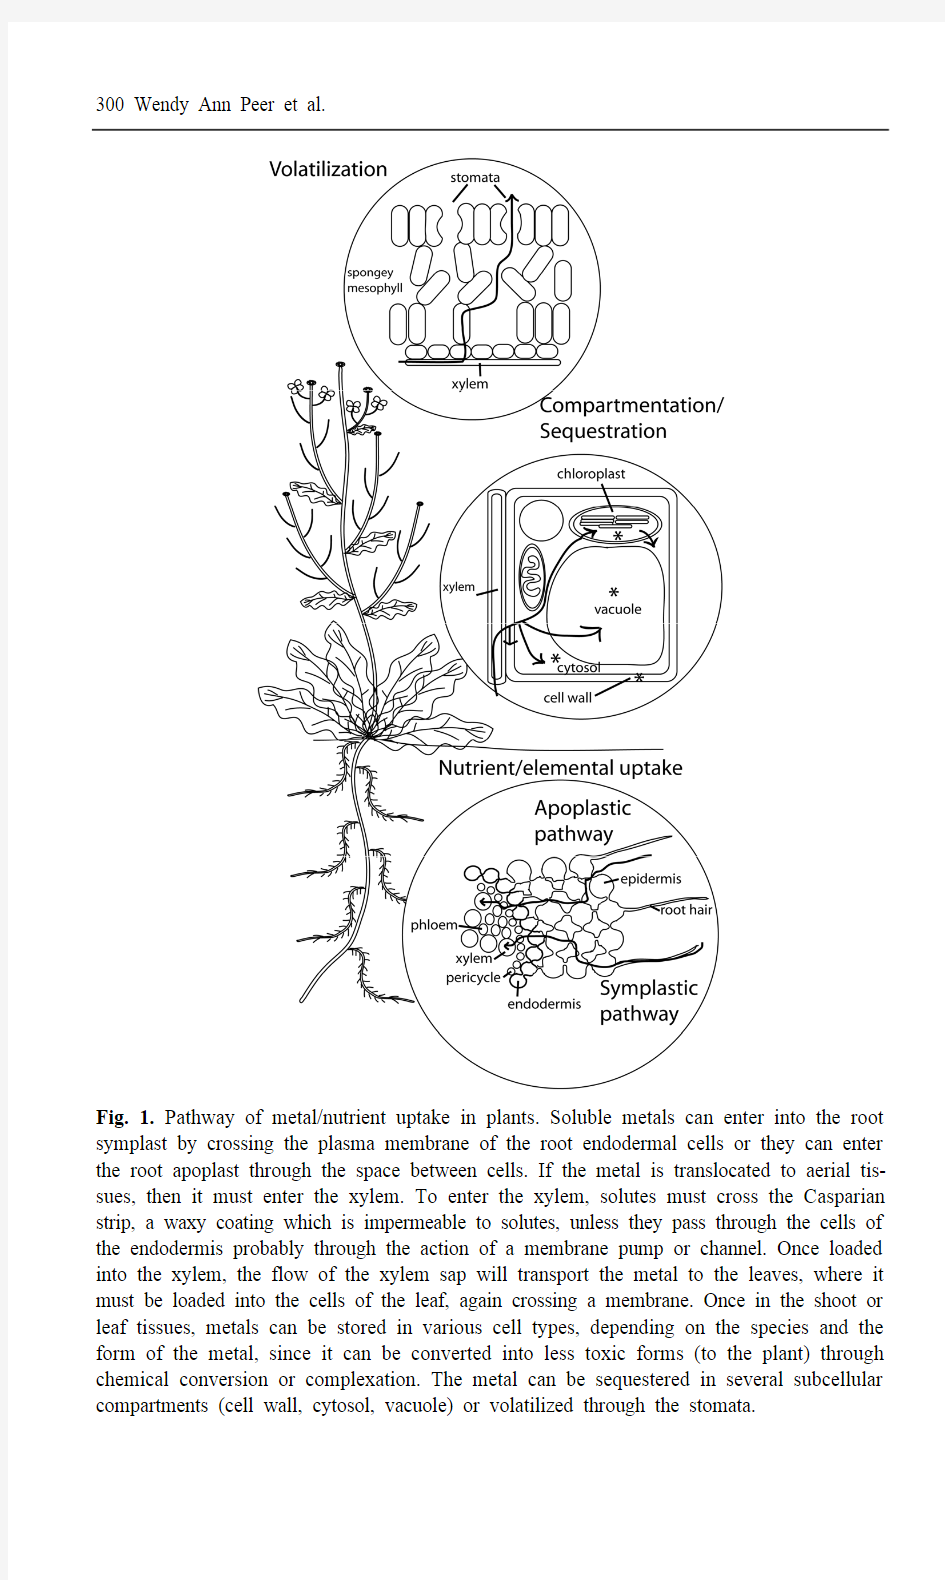 Phytoremediation and hyperaccumulator plants